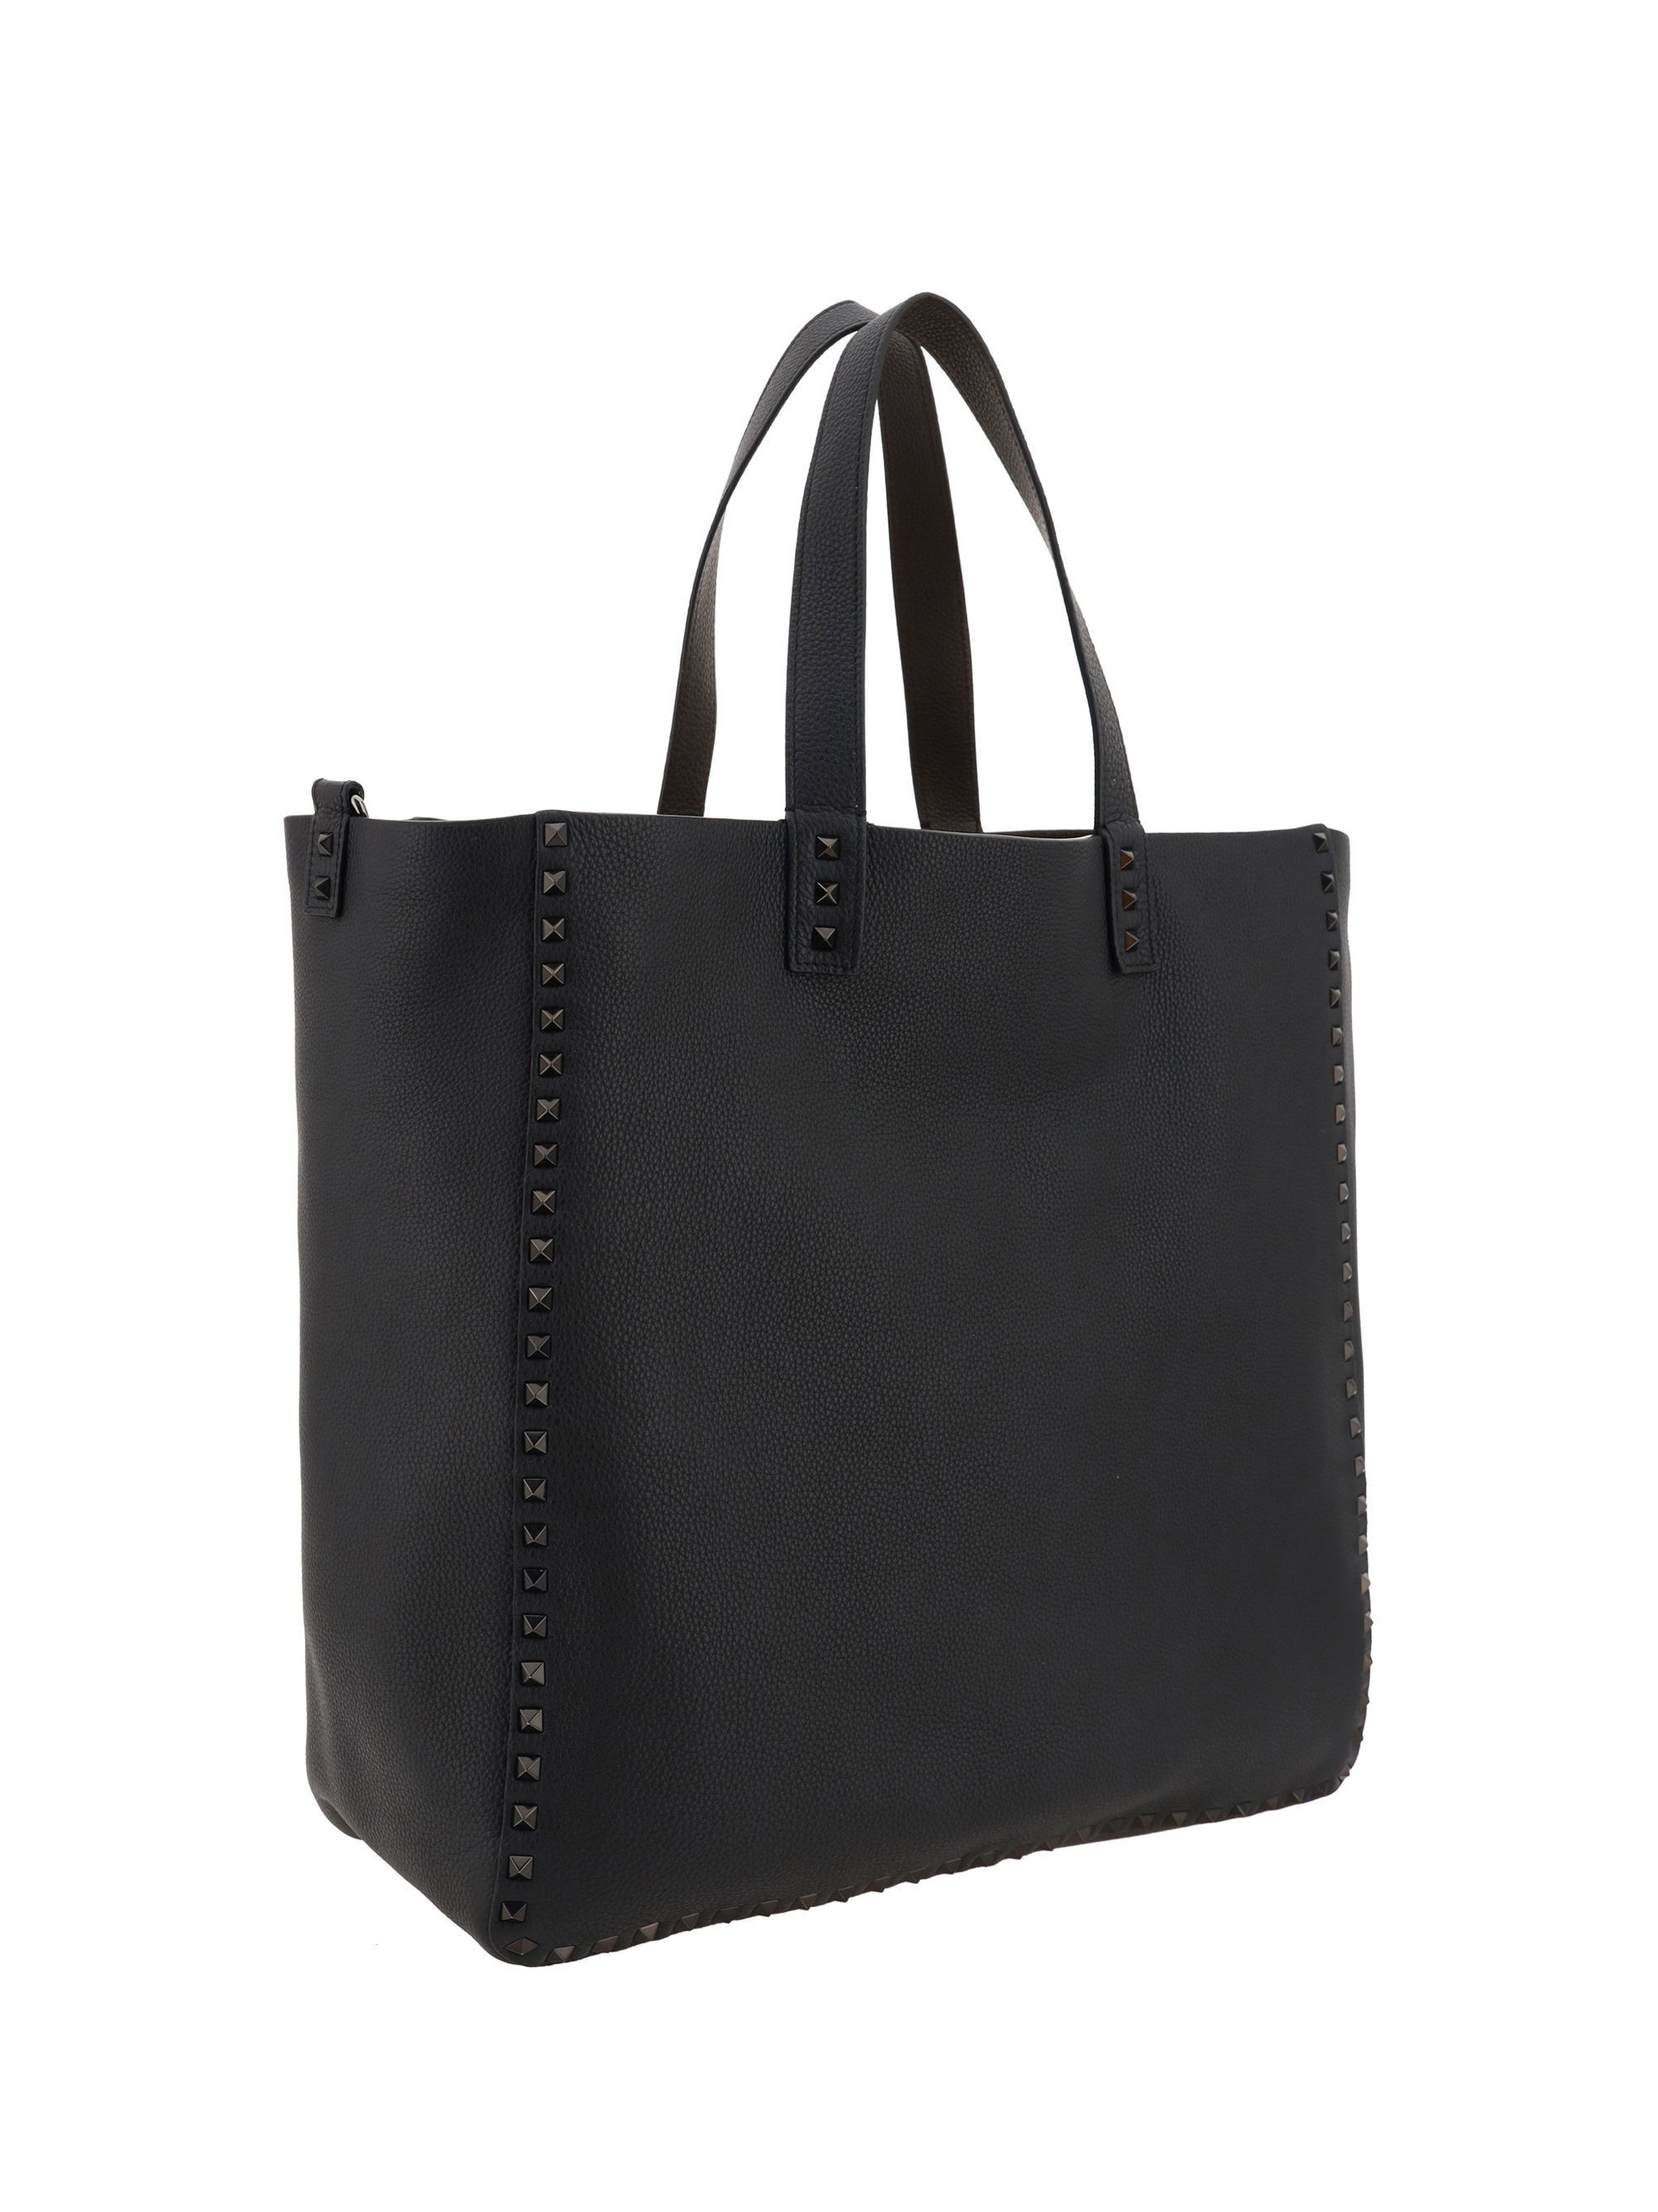 Valentino Men's Rockstud Small Leather Tote Bag